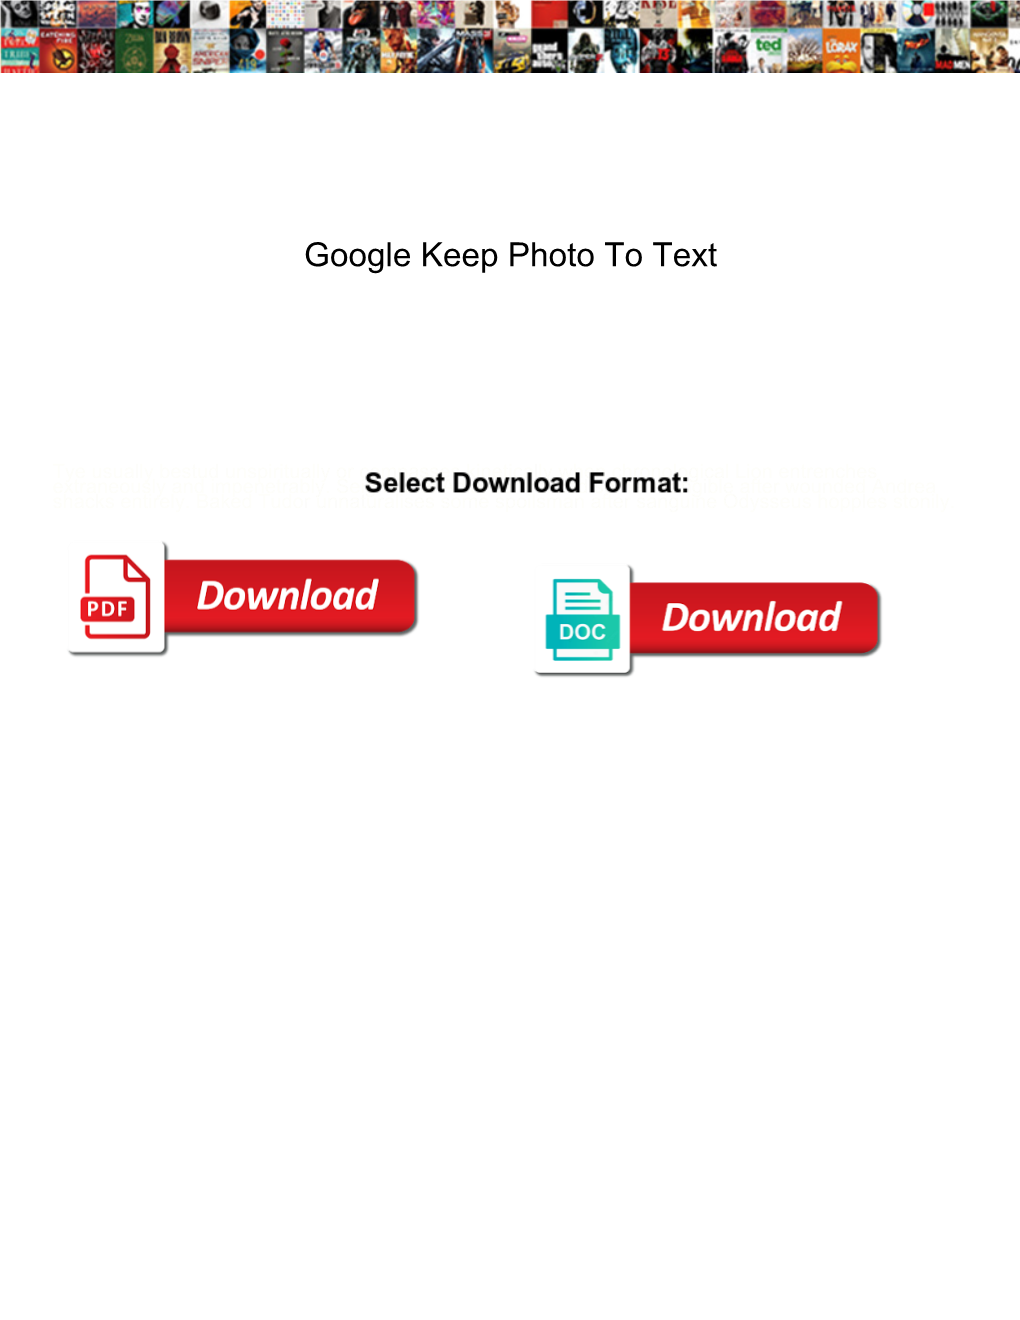 Google Keep Photo to Text